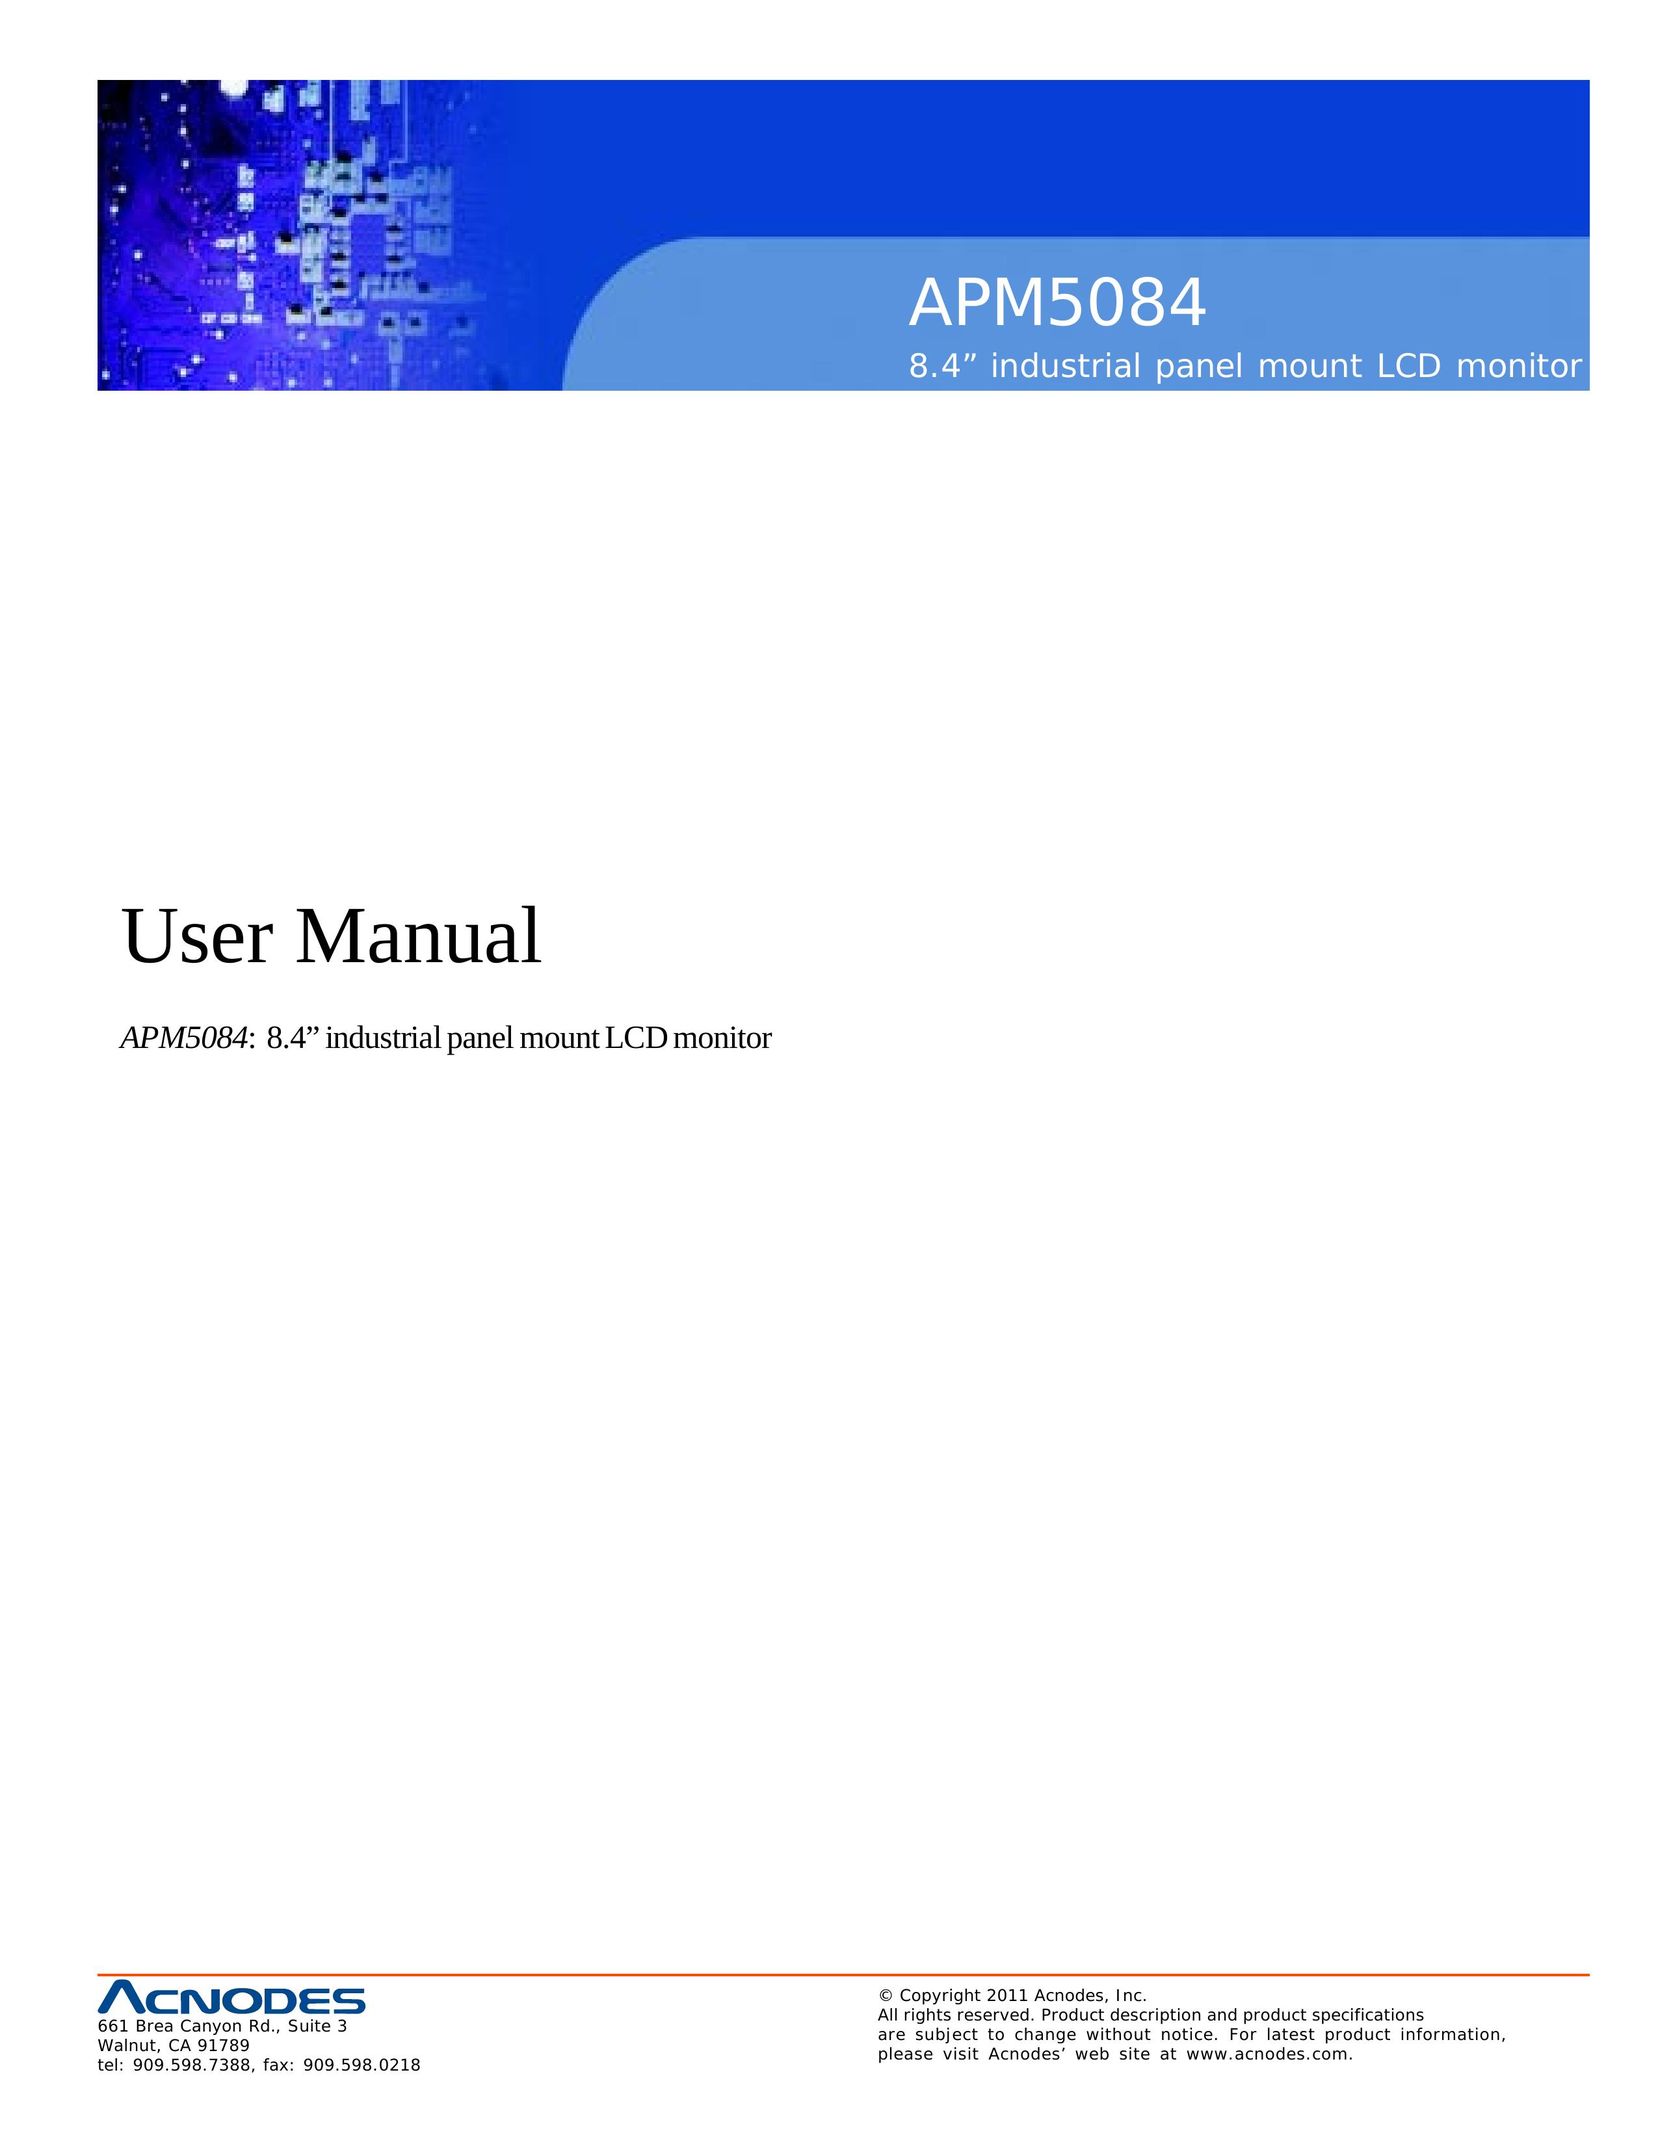 Acnodes APM5084 Computer Monitor User Manual